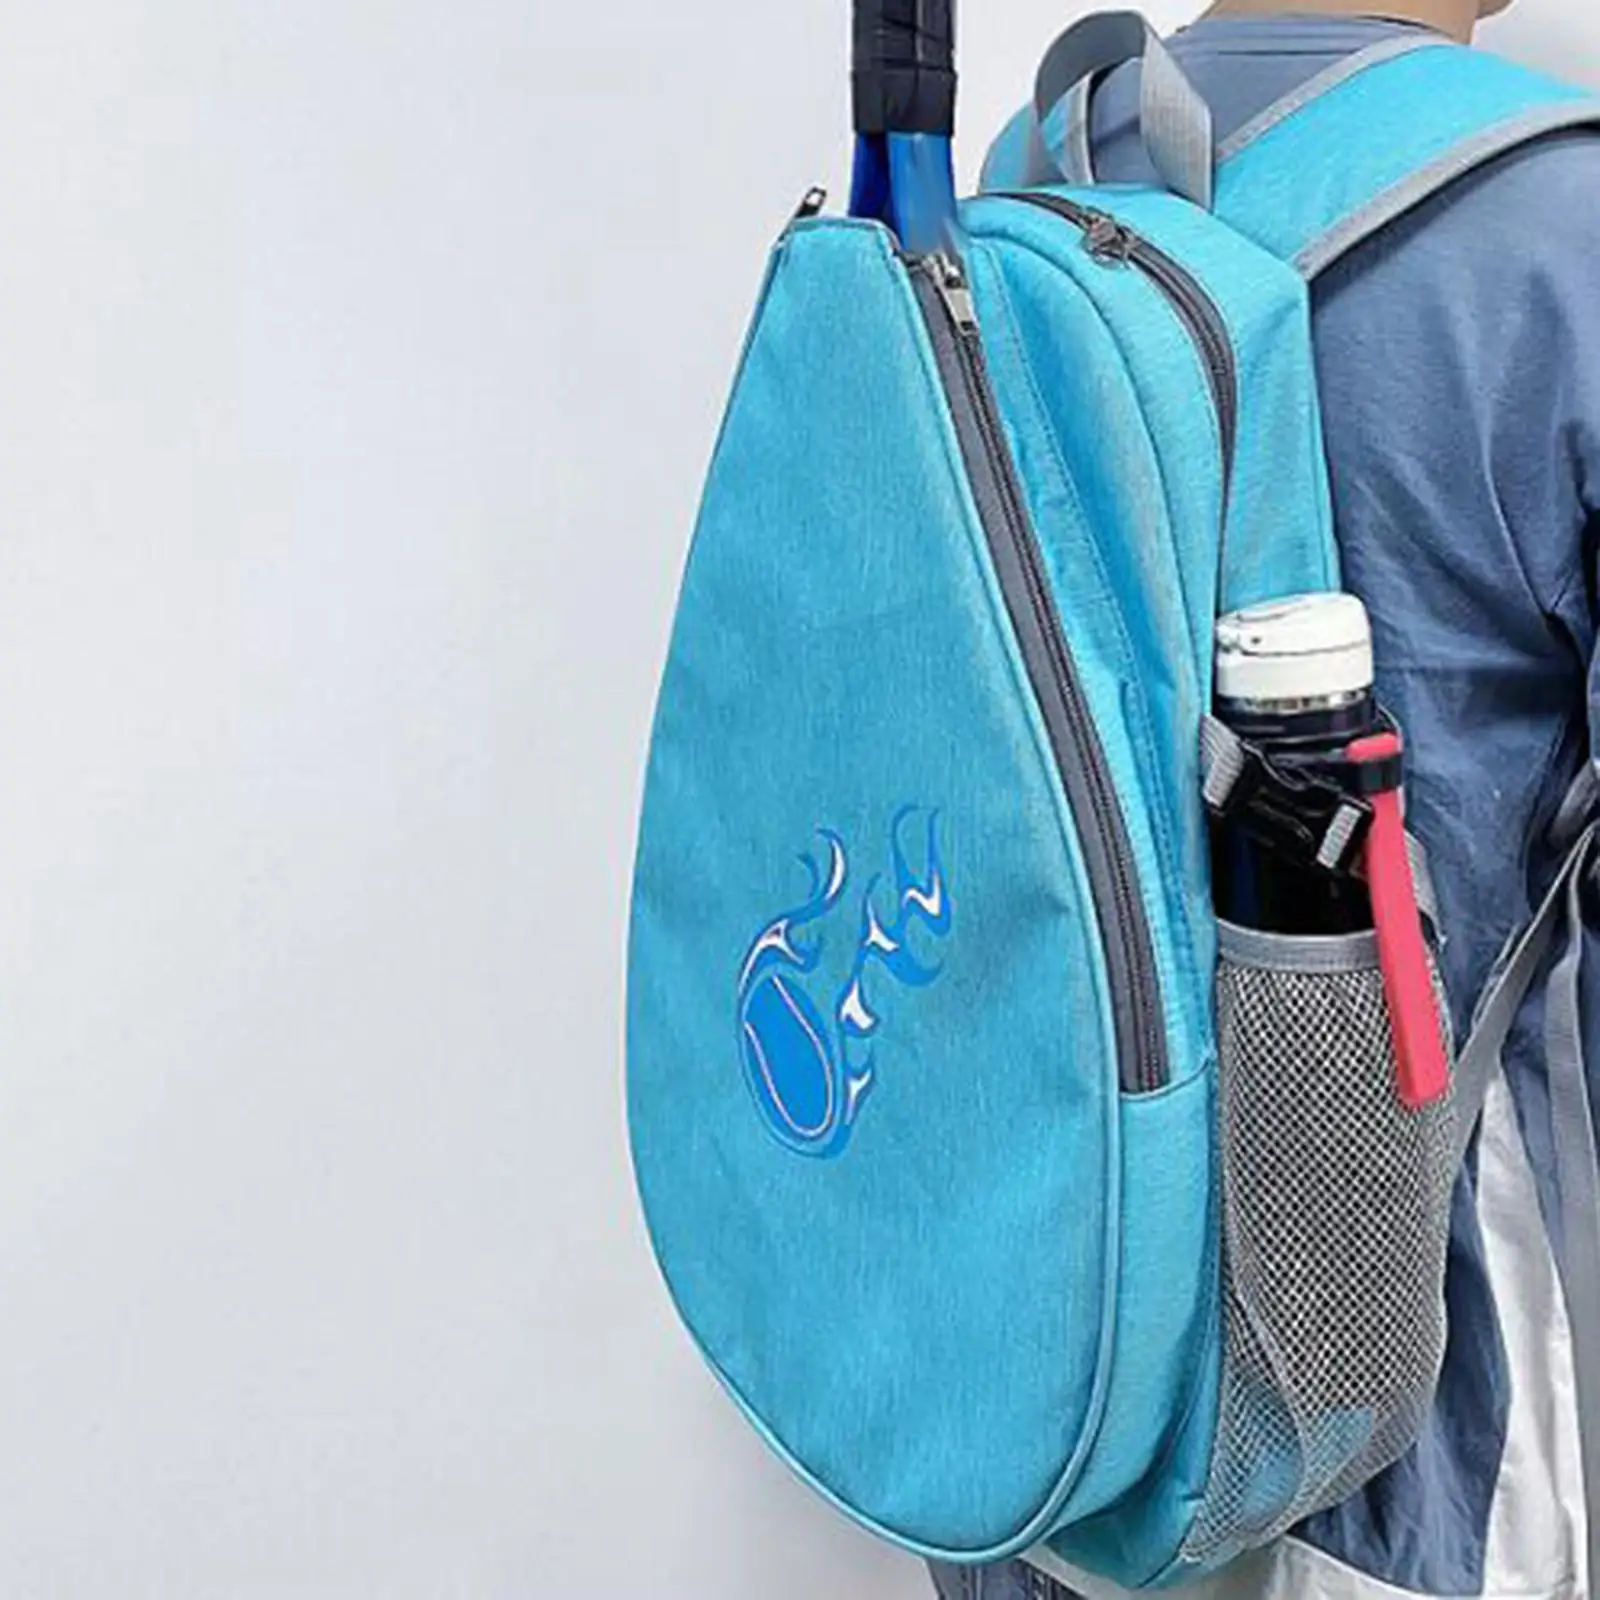 Tennis Bag Tennis Backpack Multifunctional Sport Bag for Women Men Large Racket Bags for Tennis Racket Badminton Racquet